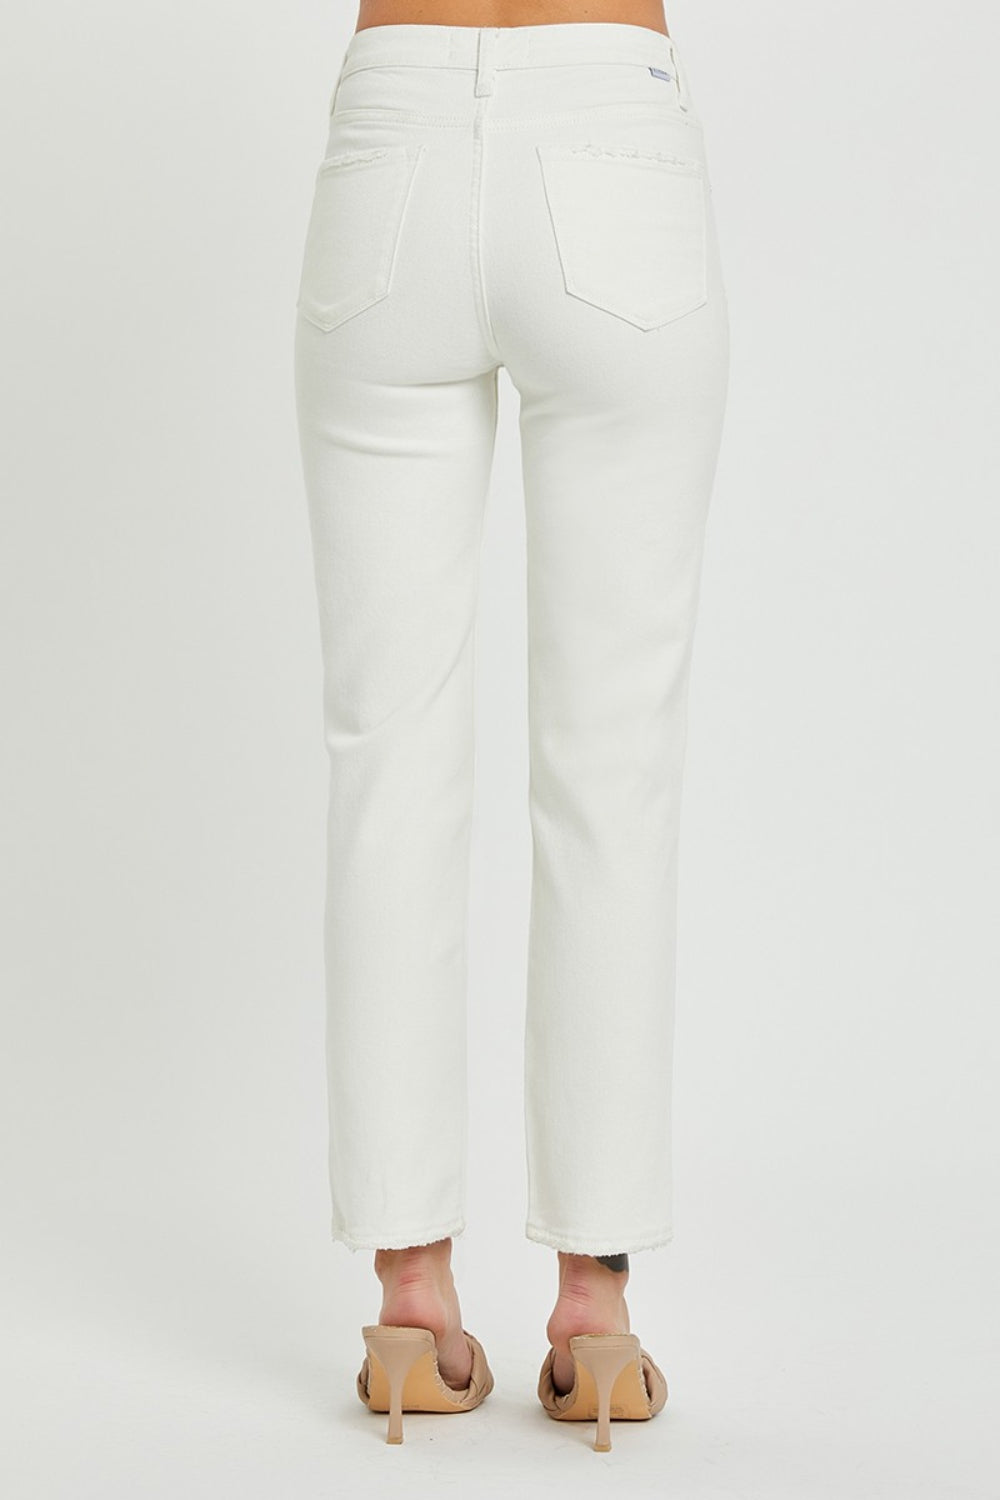 RISEN Tummy Control White Jeans - Inspired Eye Boutique